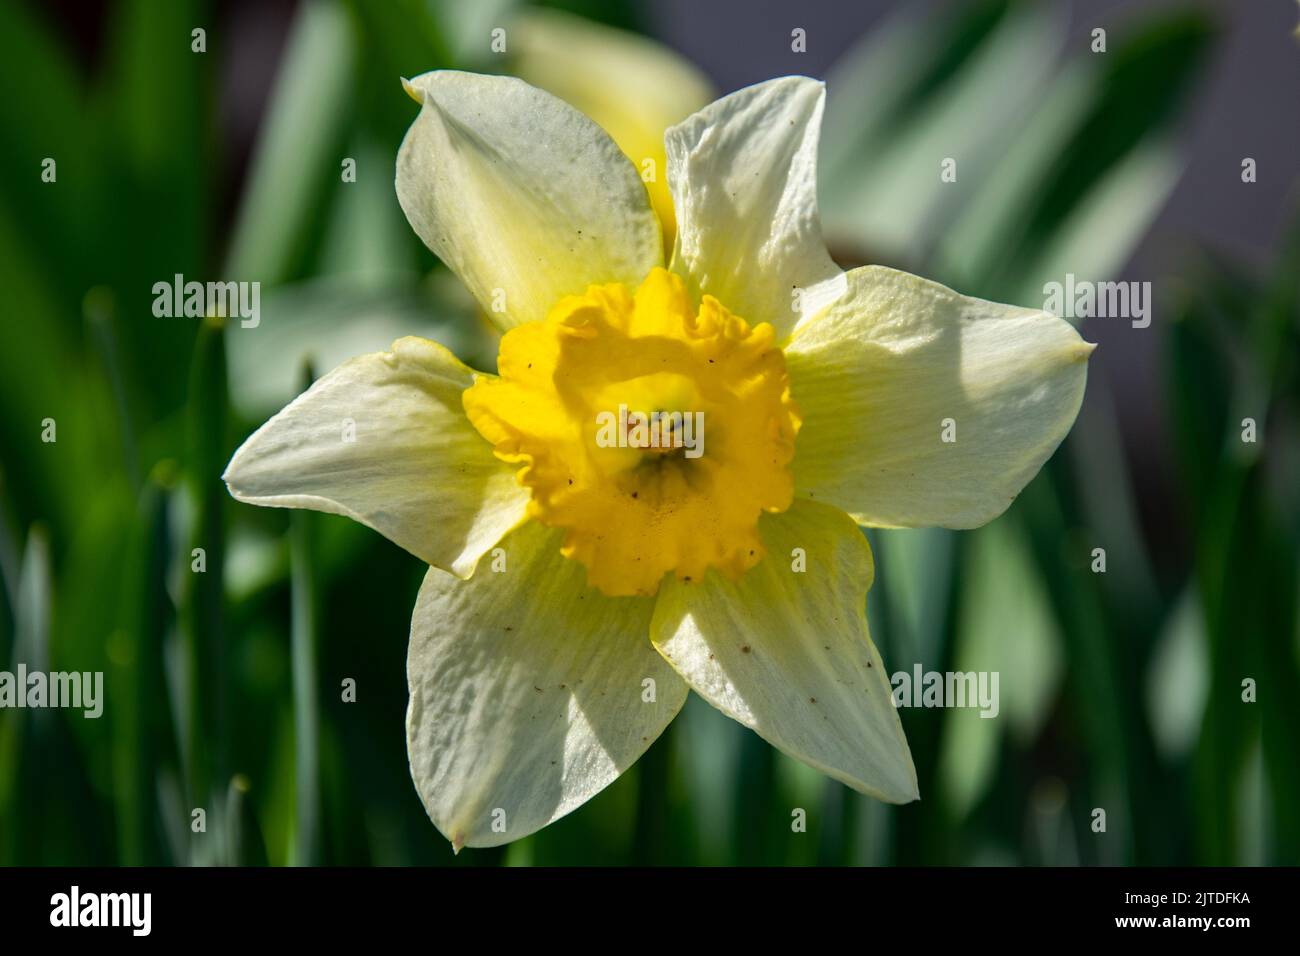 Yellow daffodil flower bloom in garden Stock Photo